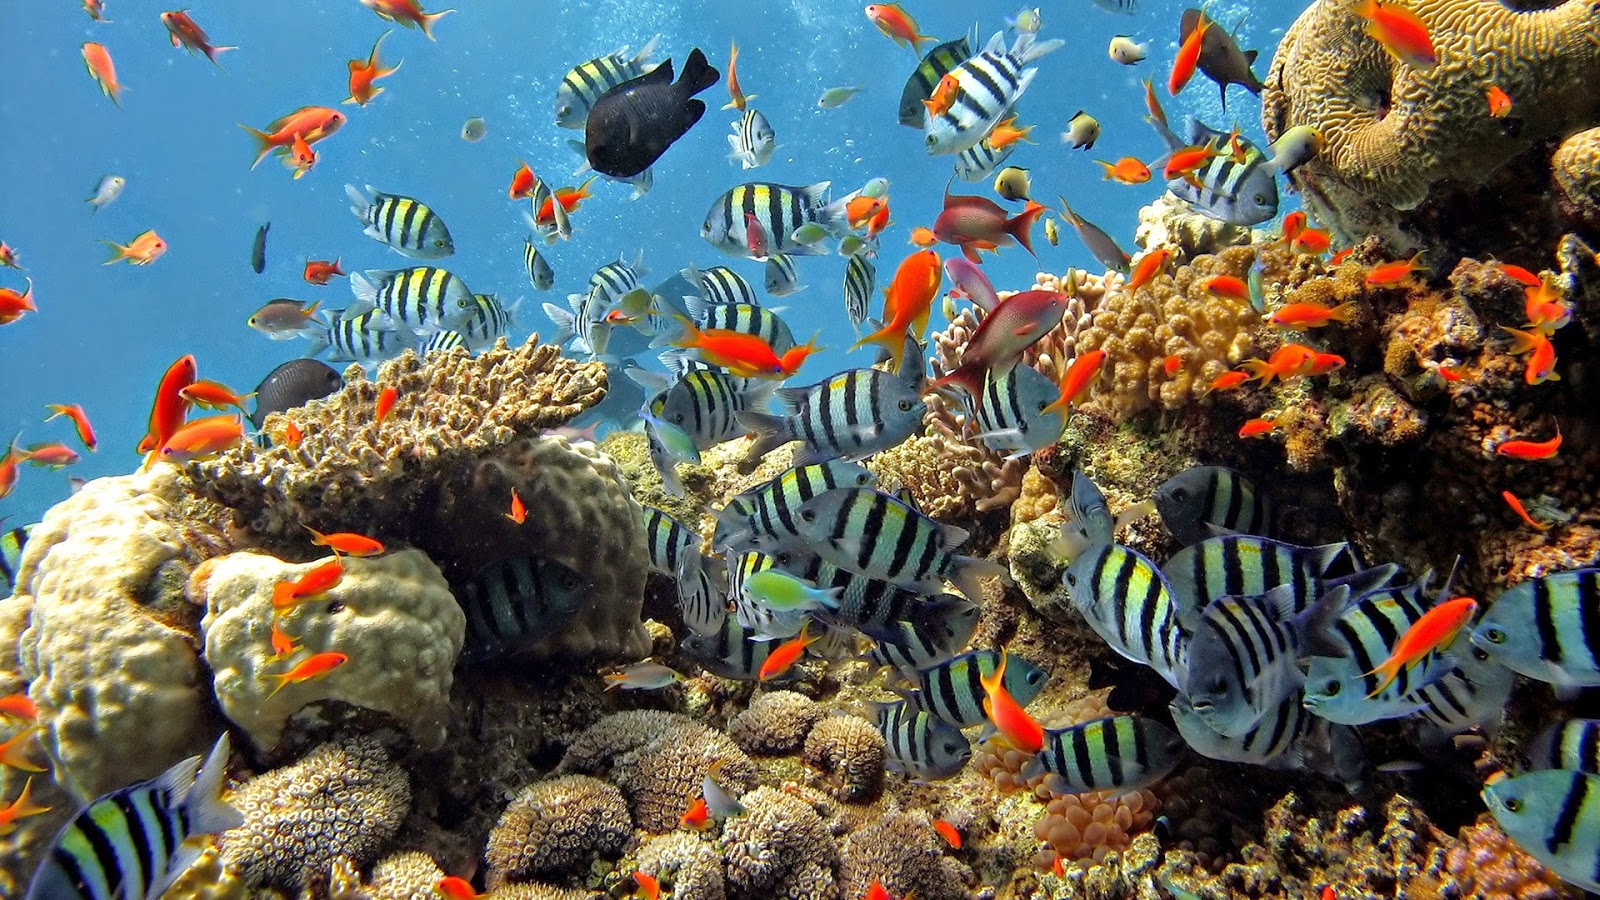 barriera corallina wallpaper hd,barriera corallina,scogliera,pesci di barriera corallina,subacqueo,biologia marina